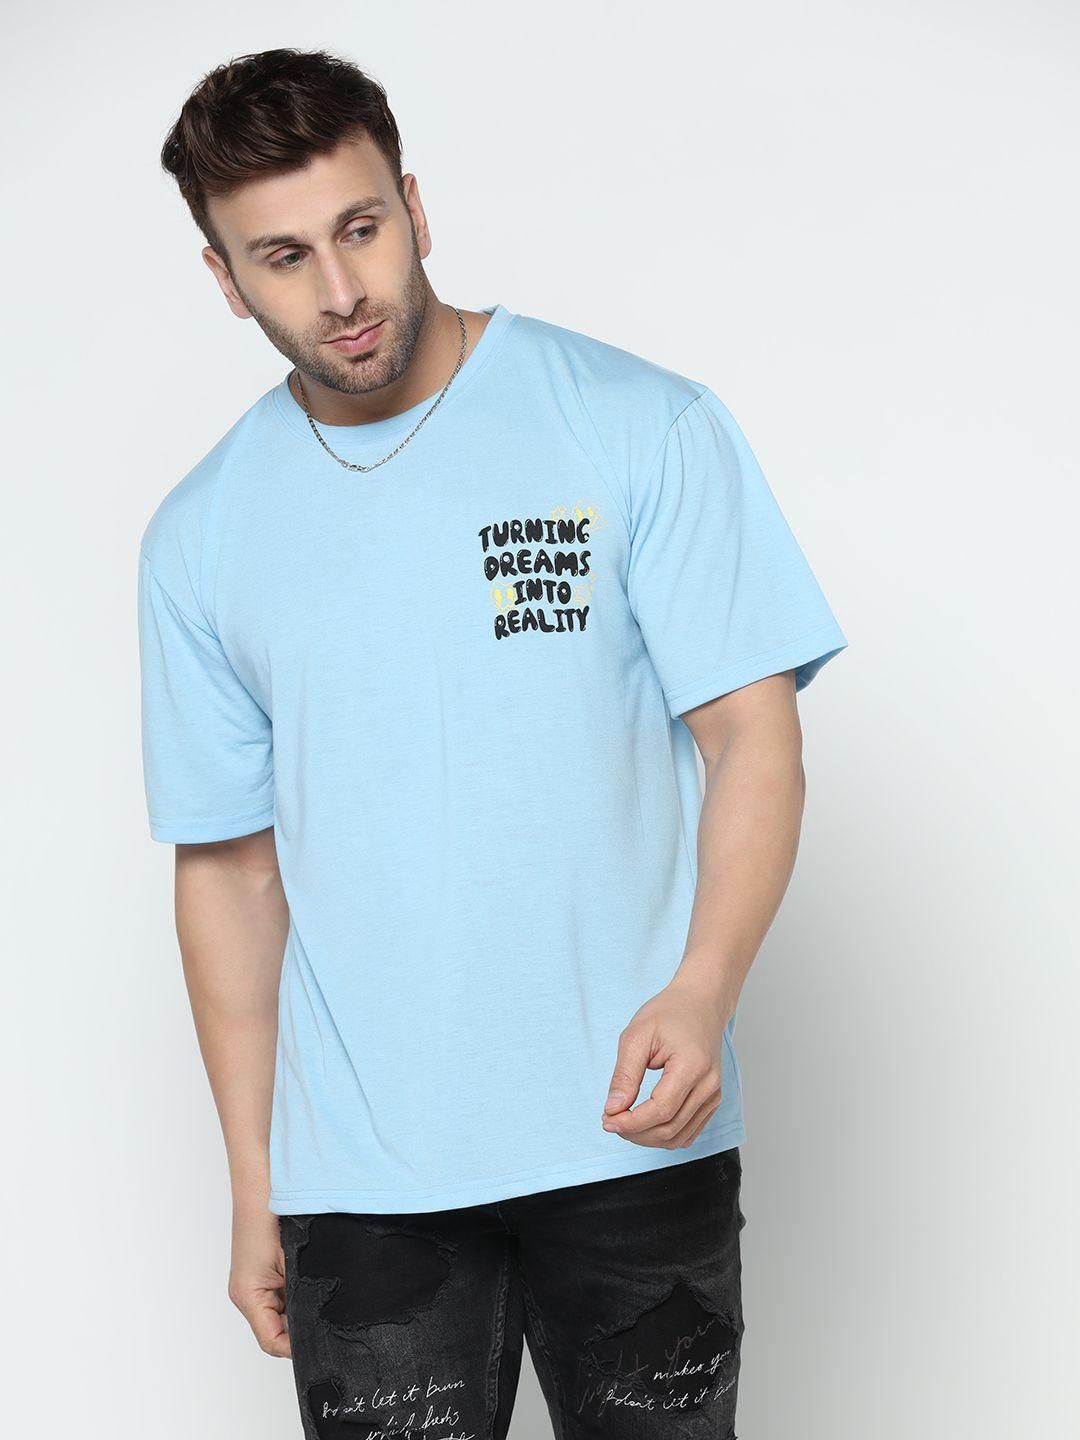 Cotton Blend Printed Half Sleeves Men's Round Neck T-Shirt